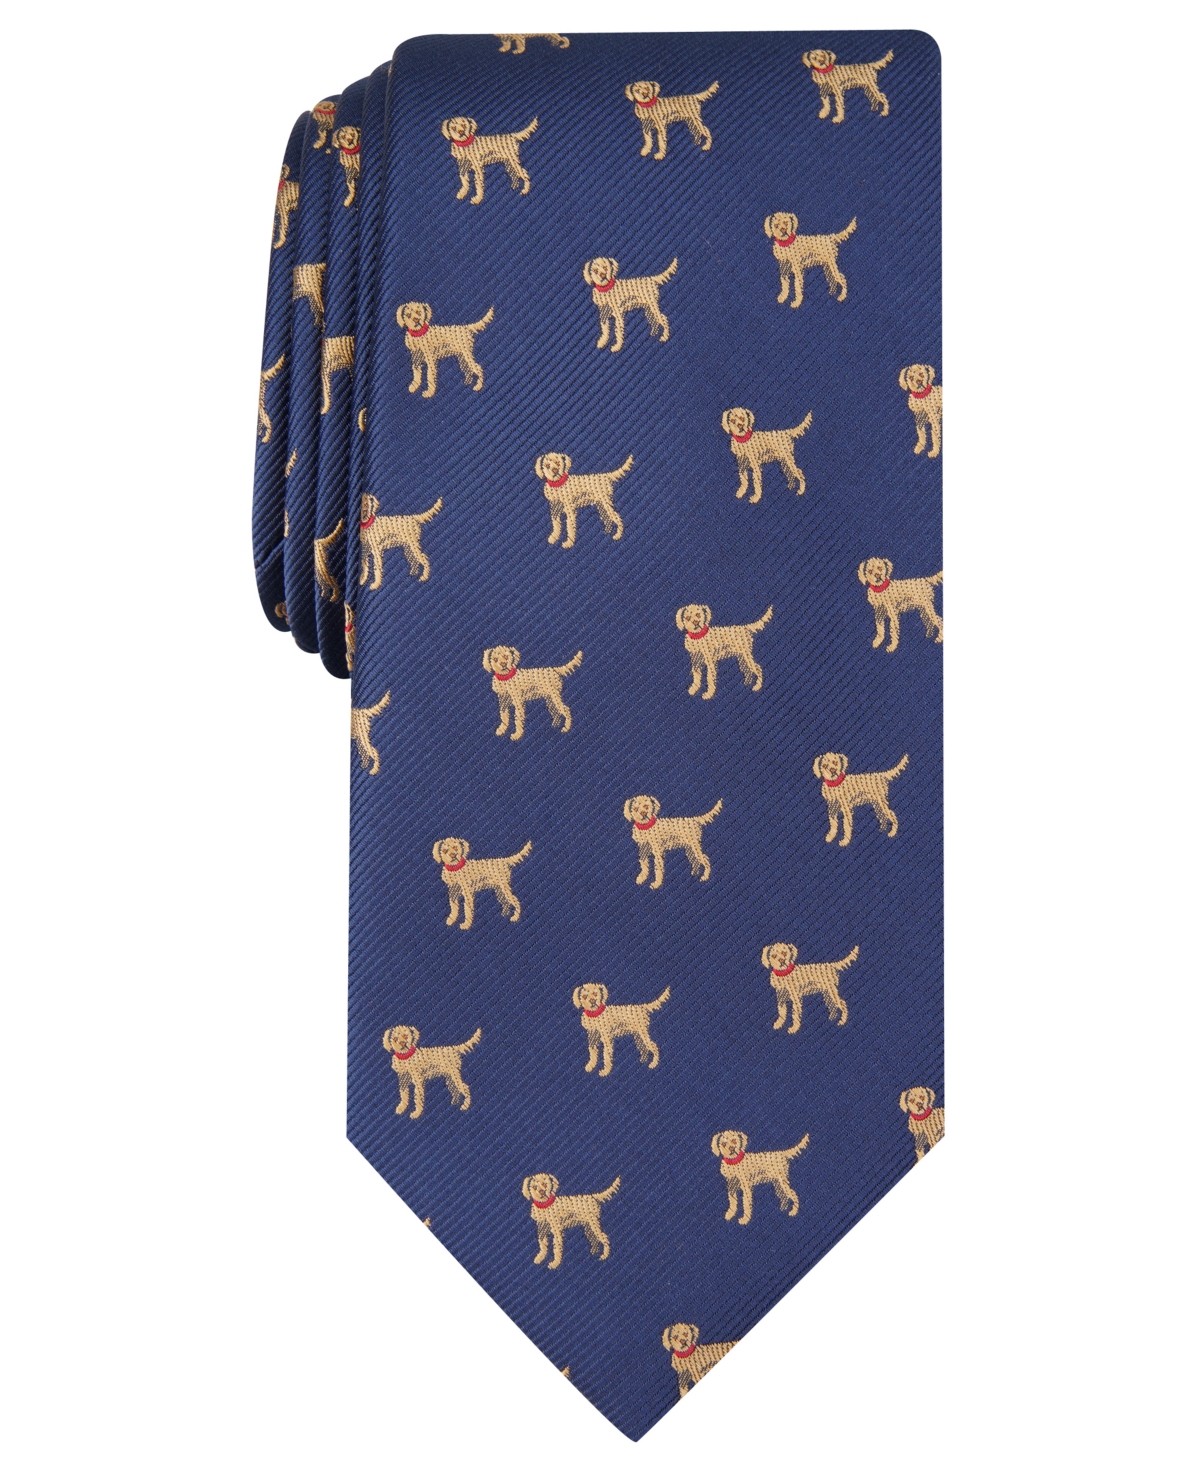 Men's Labrador Convo Print Tie, Created for Macy's - Navy